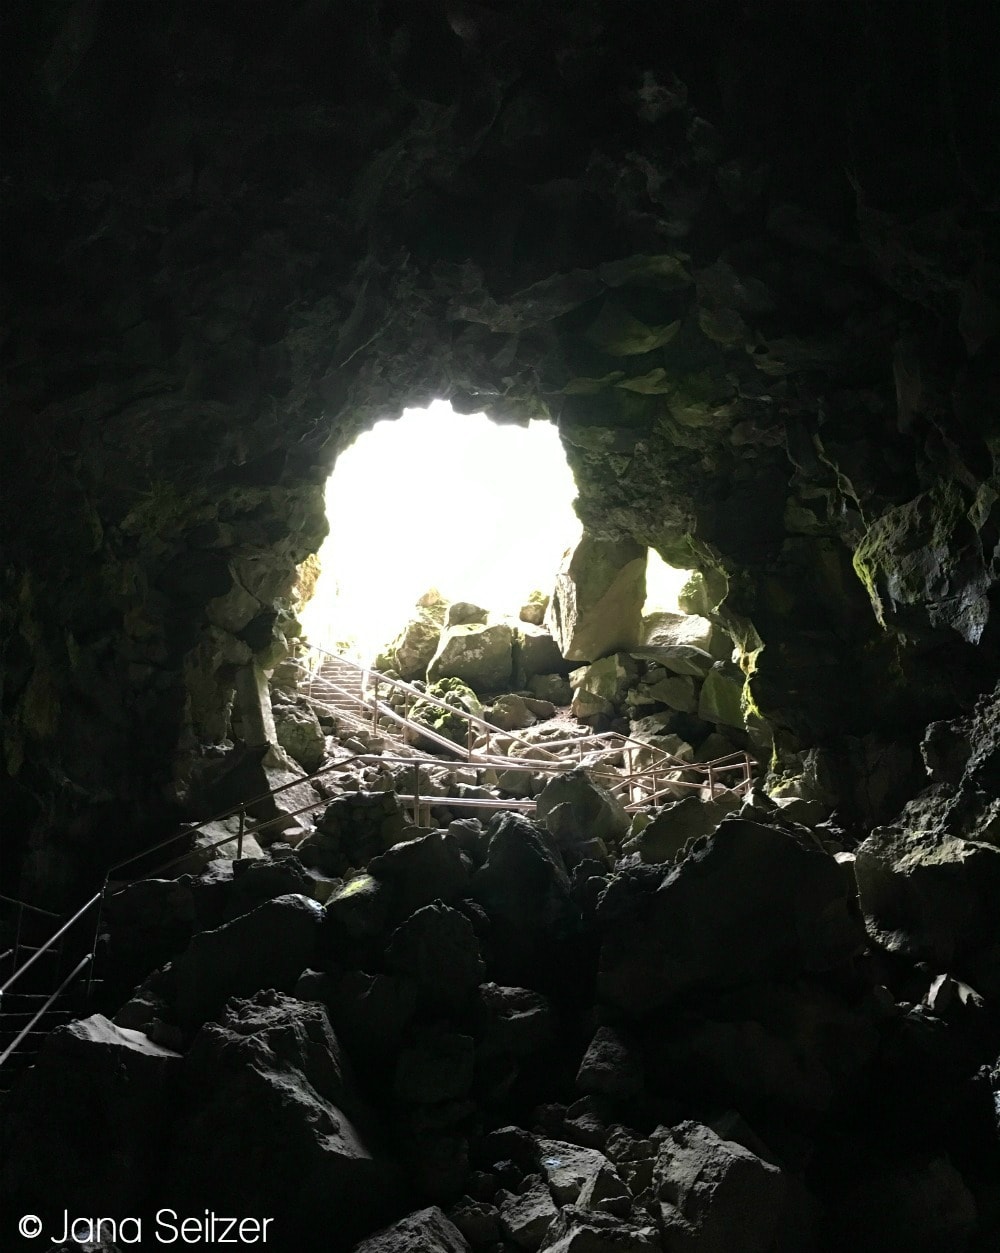 Exploring Lava River Caves in Bend, Oregon